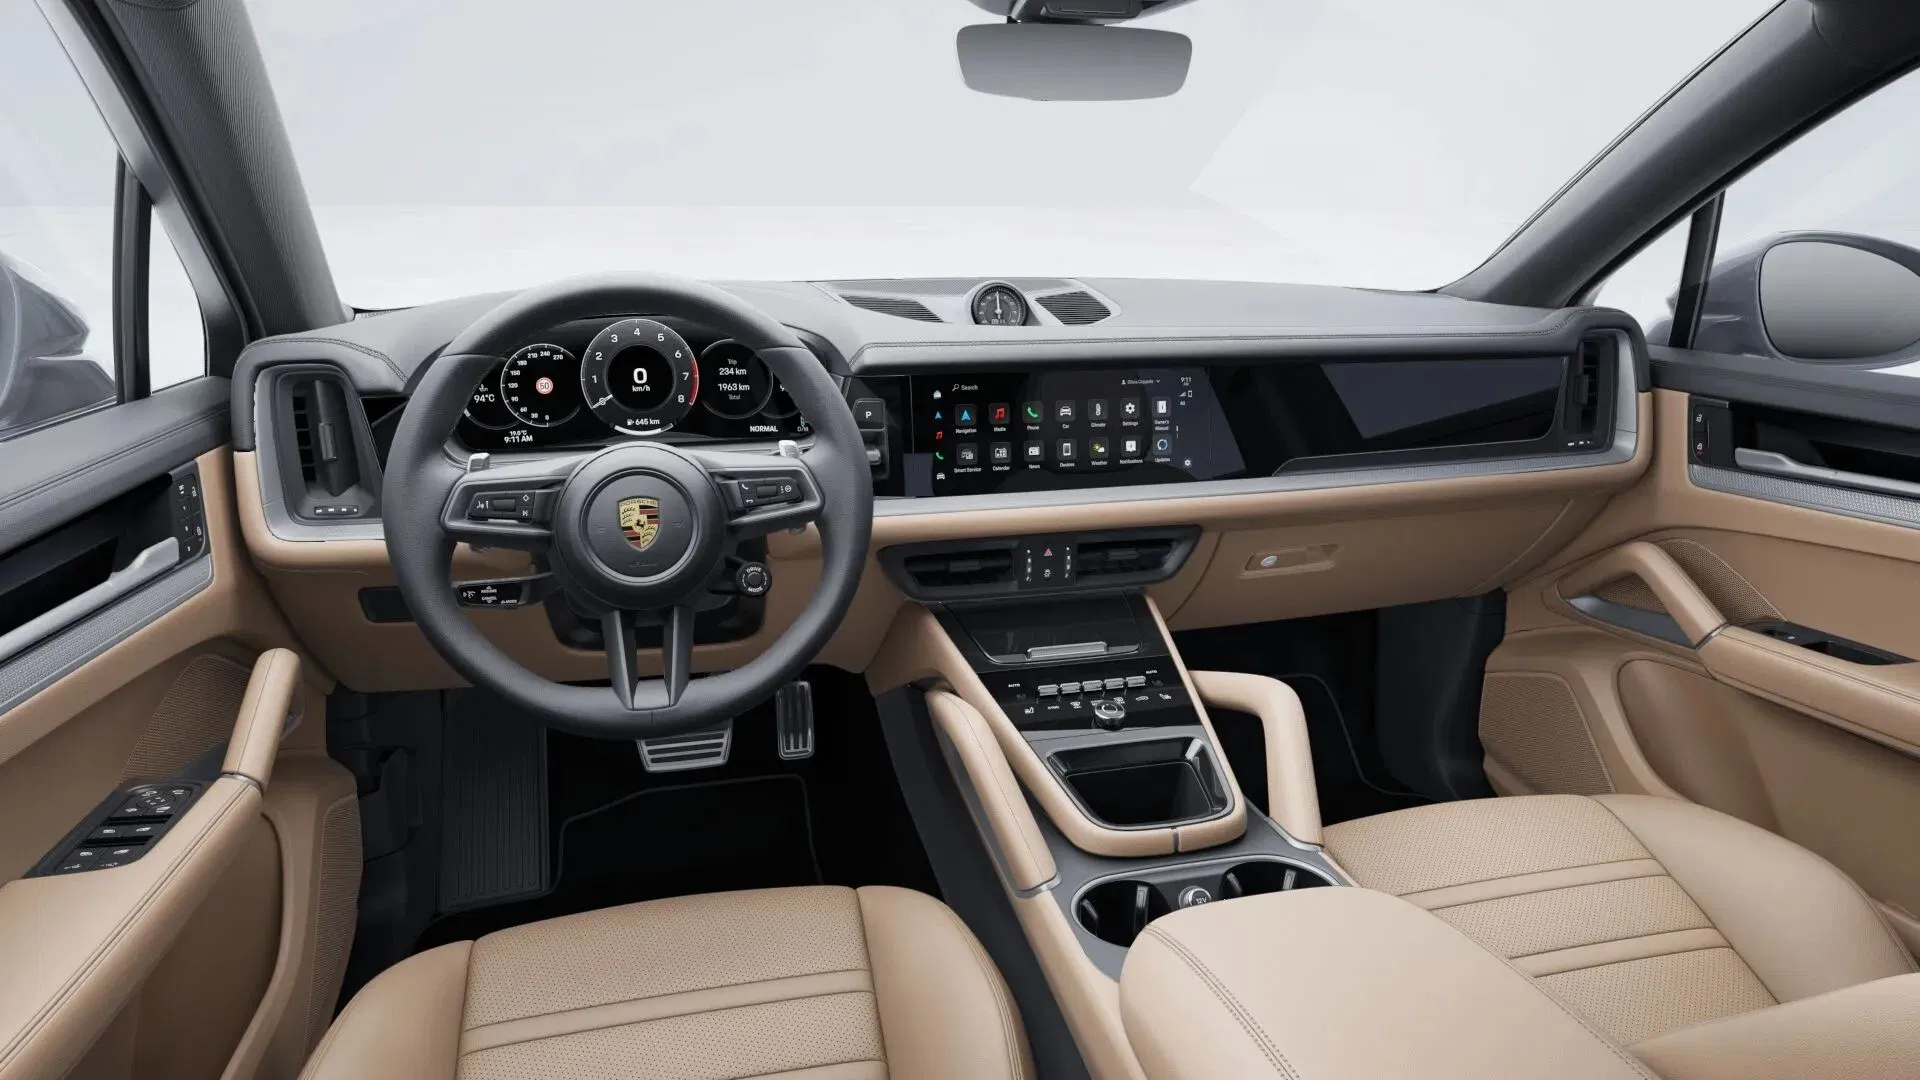 Porsche Panamera interior - Cockpit